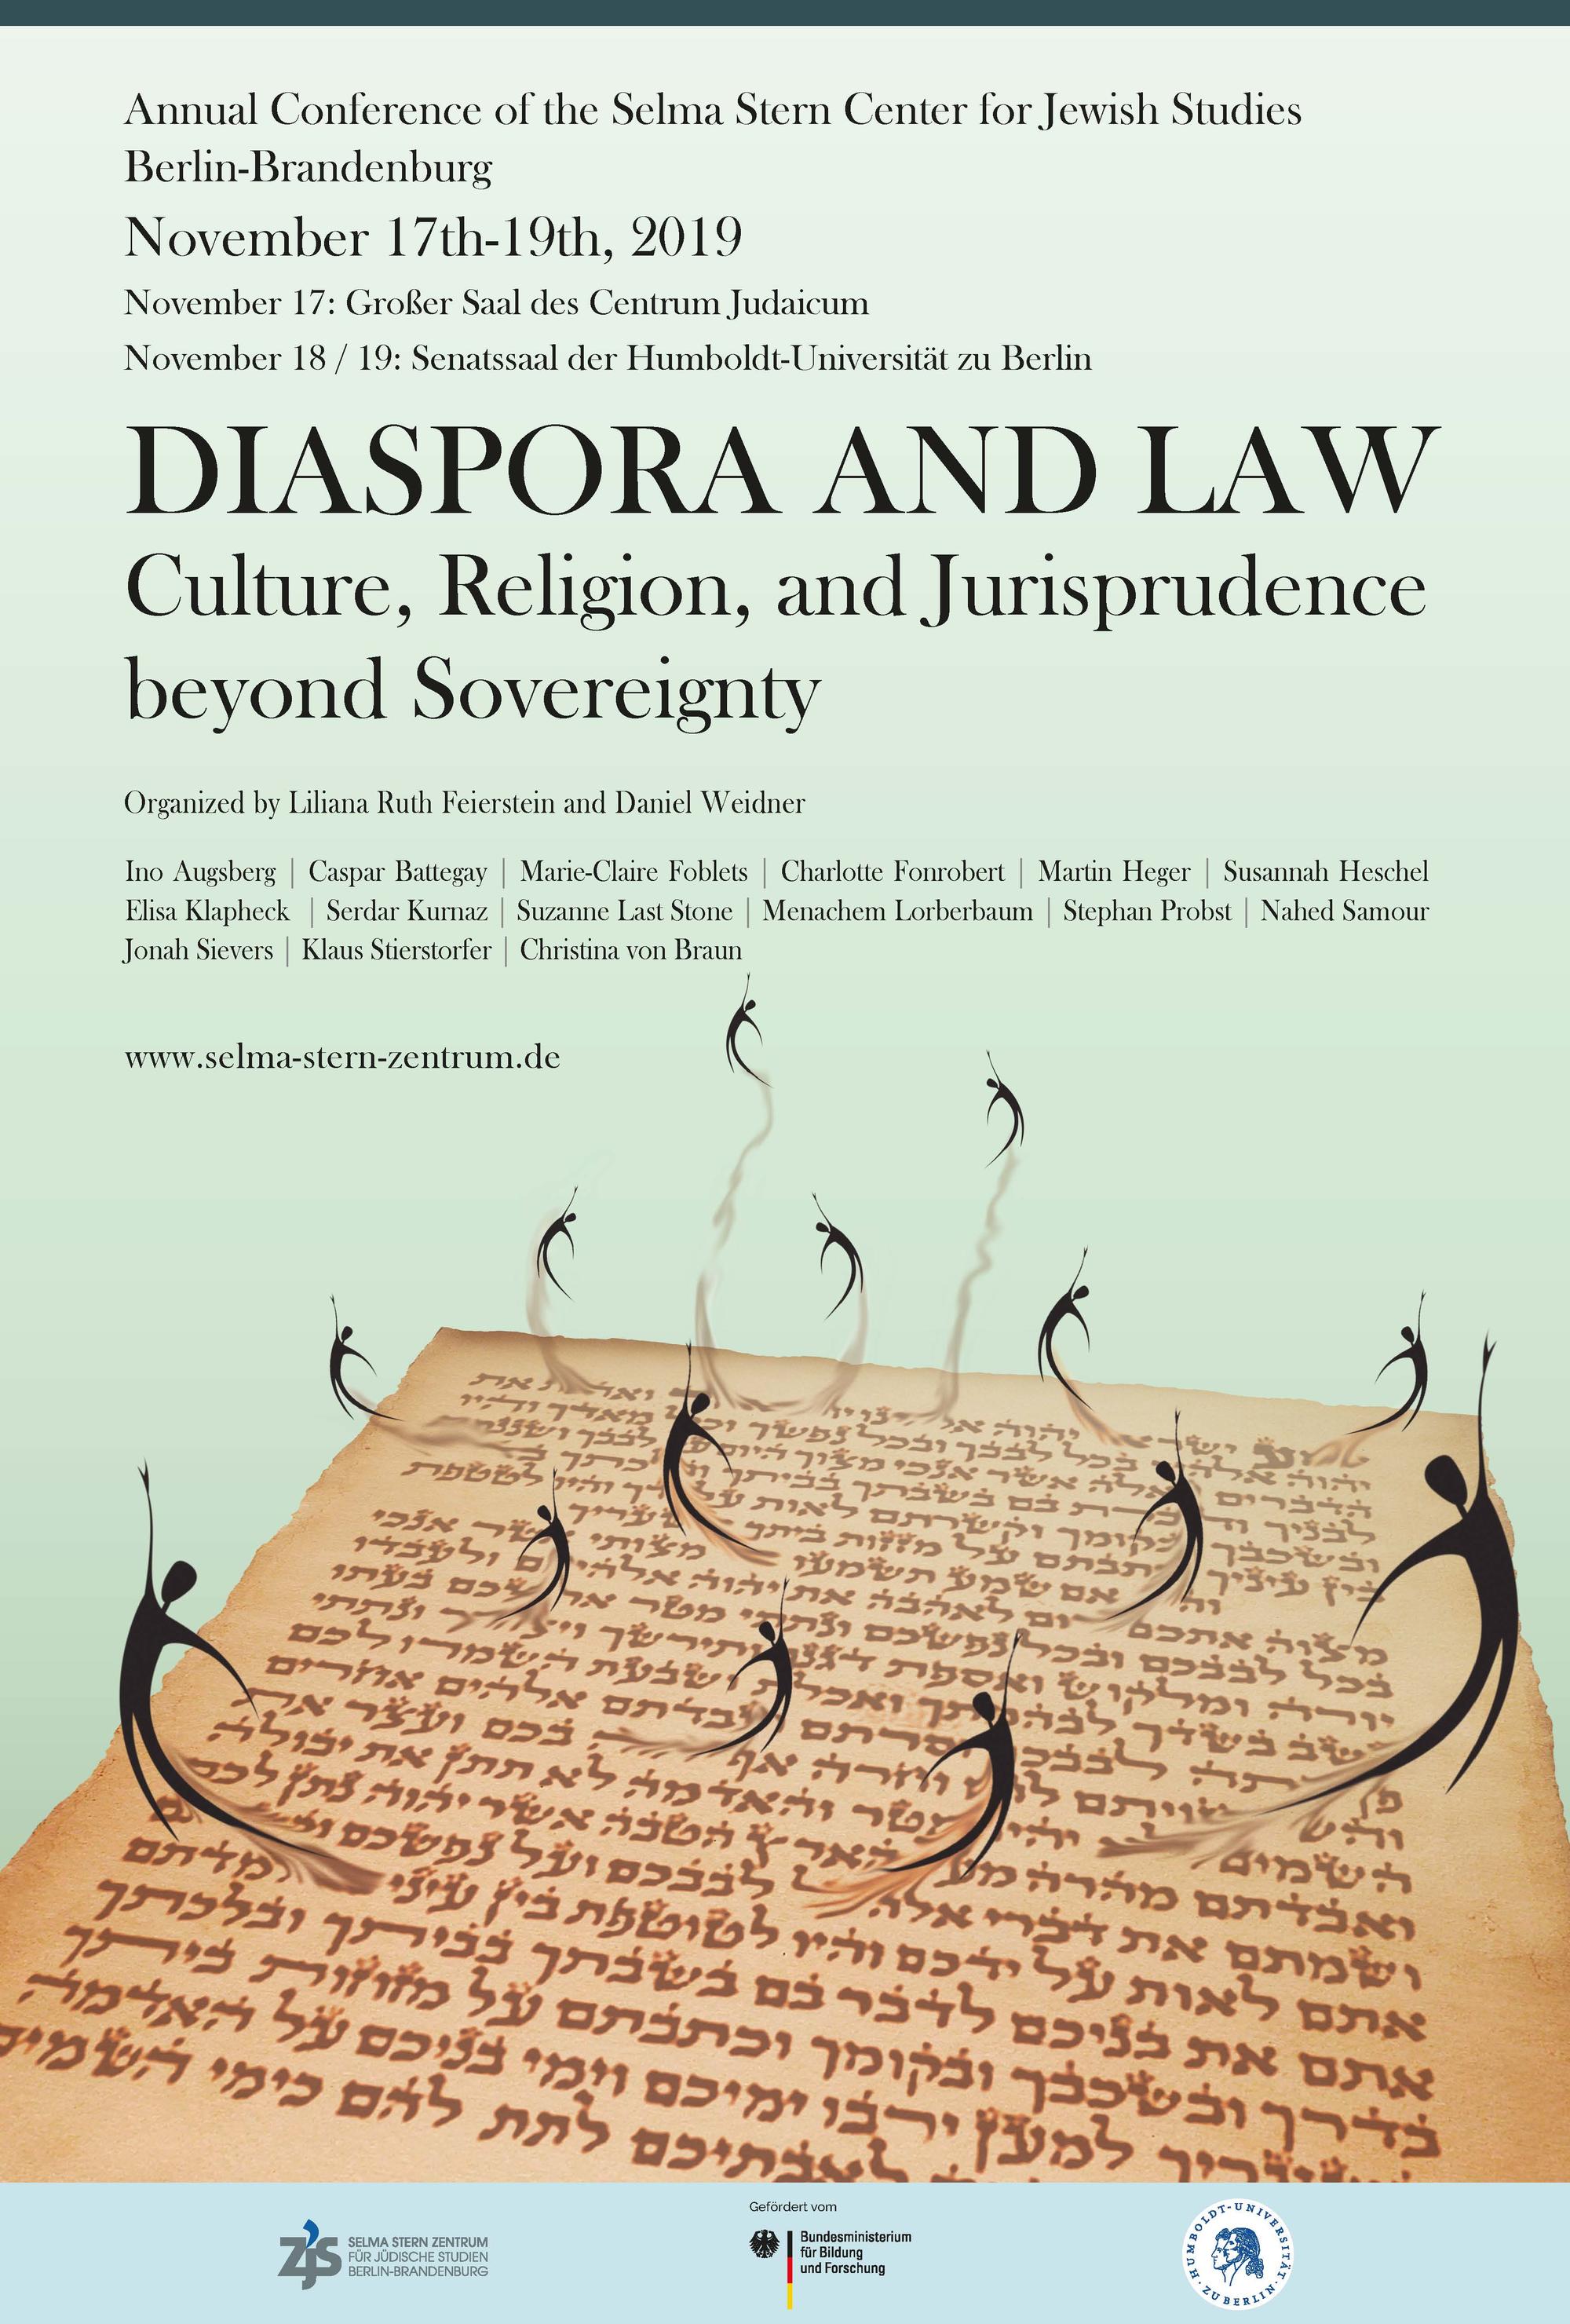 Diaspora and Law_Poster_FINAL-mp_WEB_JPG